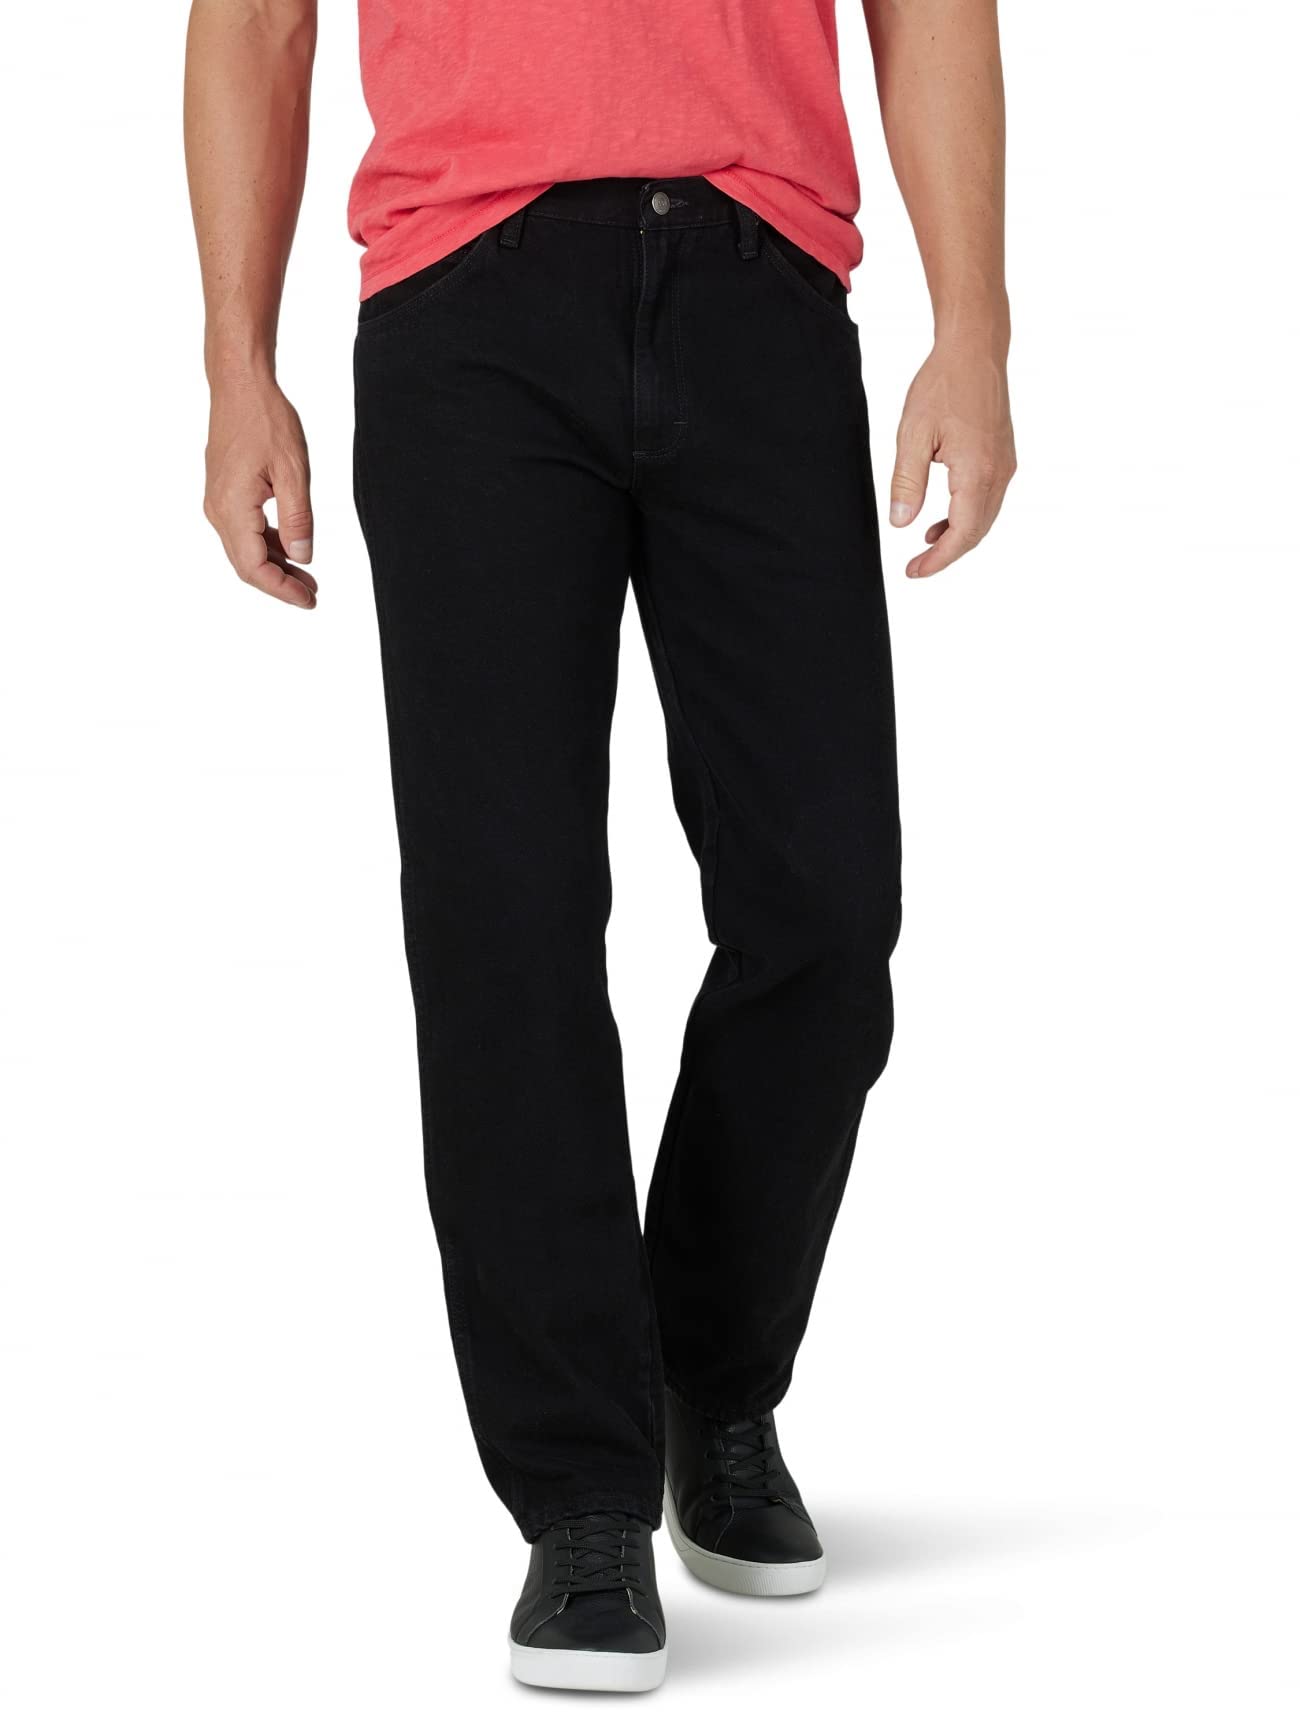 Wrangler Authentics Men's Classic 5-Pocket Regular Fit Cotton Jean, Black, 35W x 29L